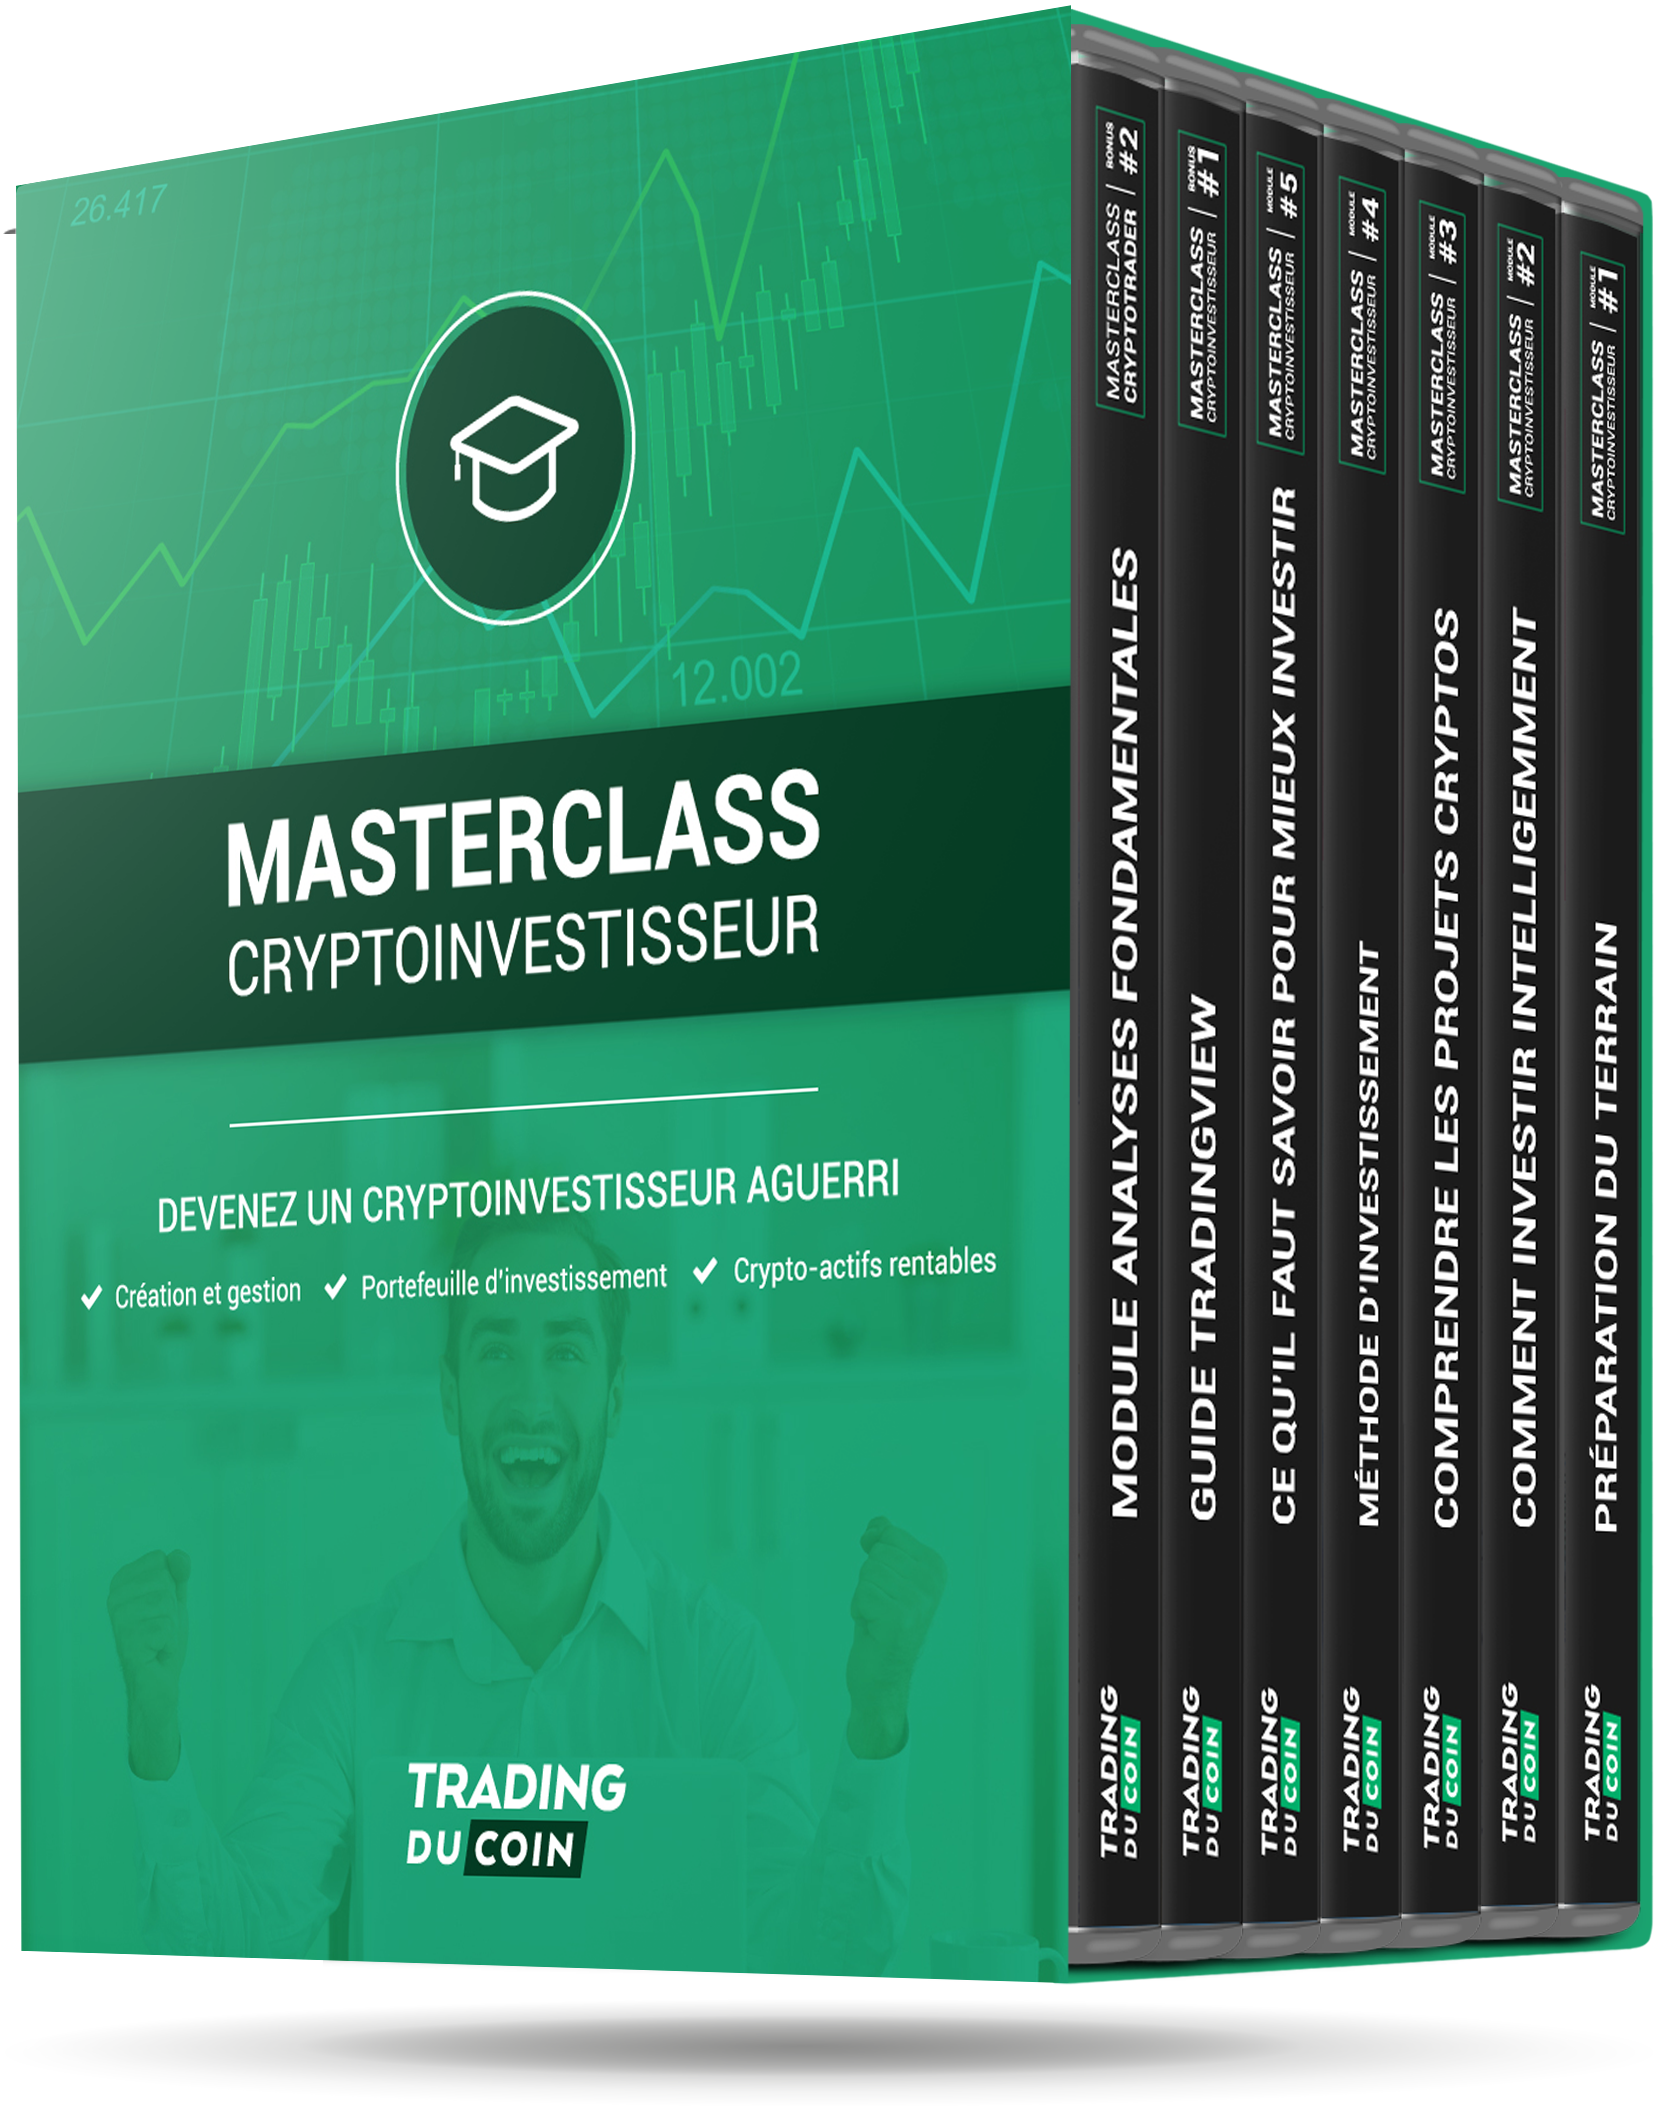 MasterClass CryptoInvestisseur™